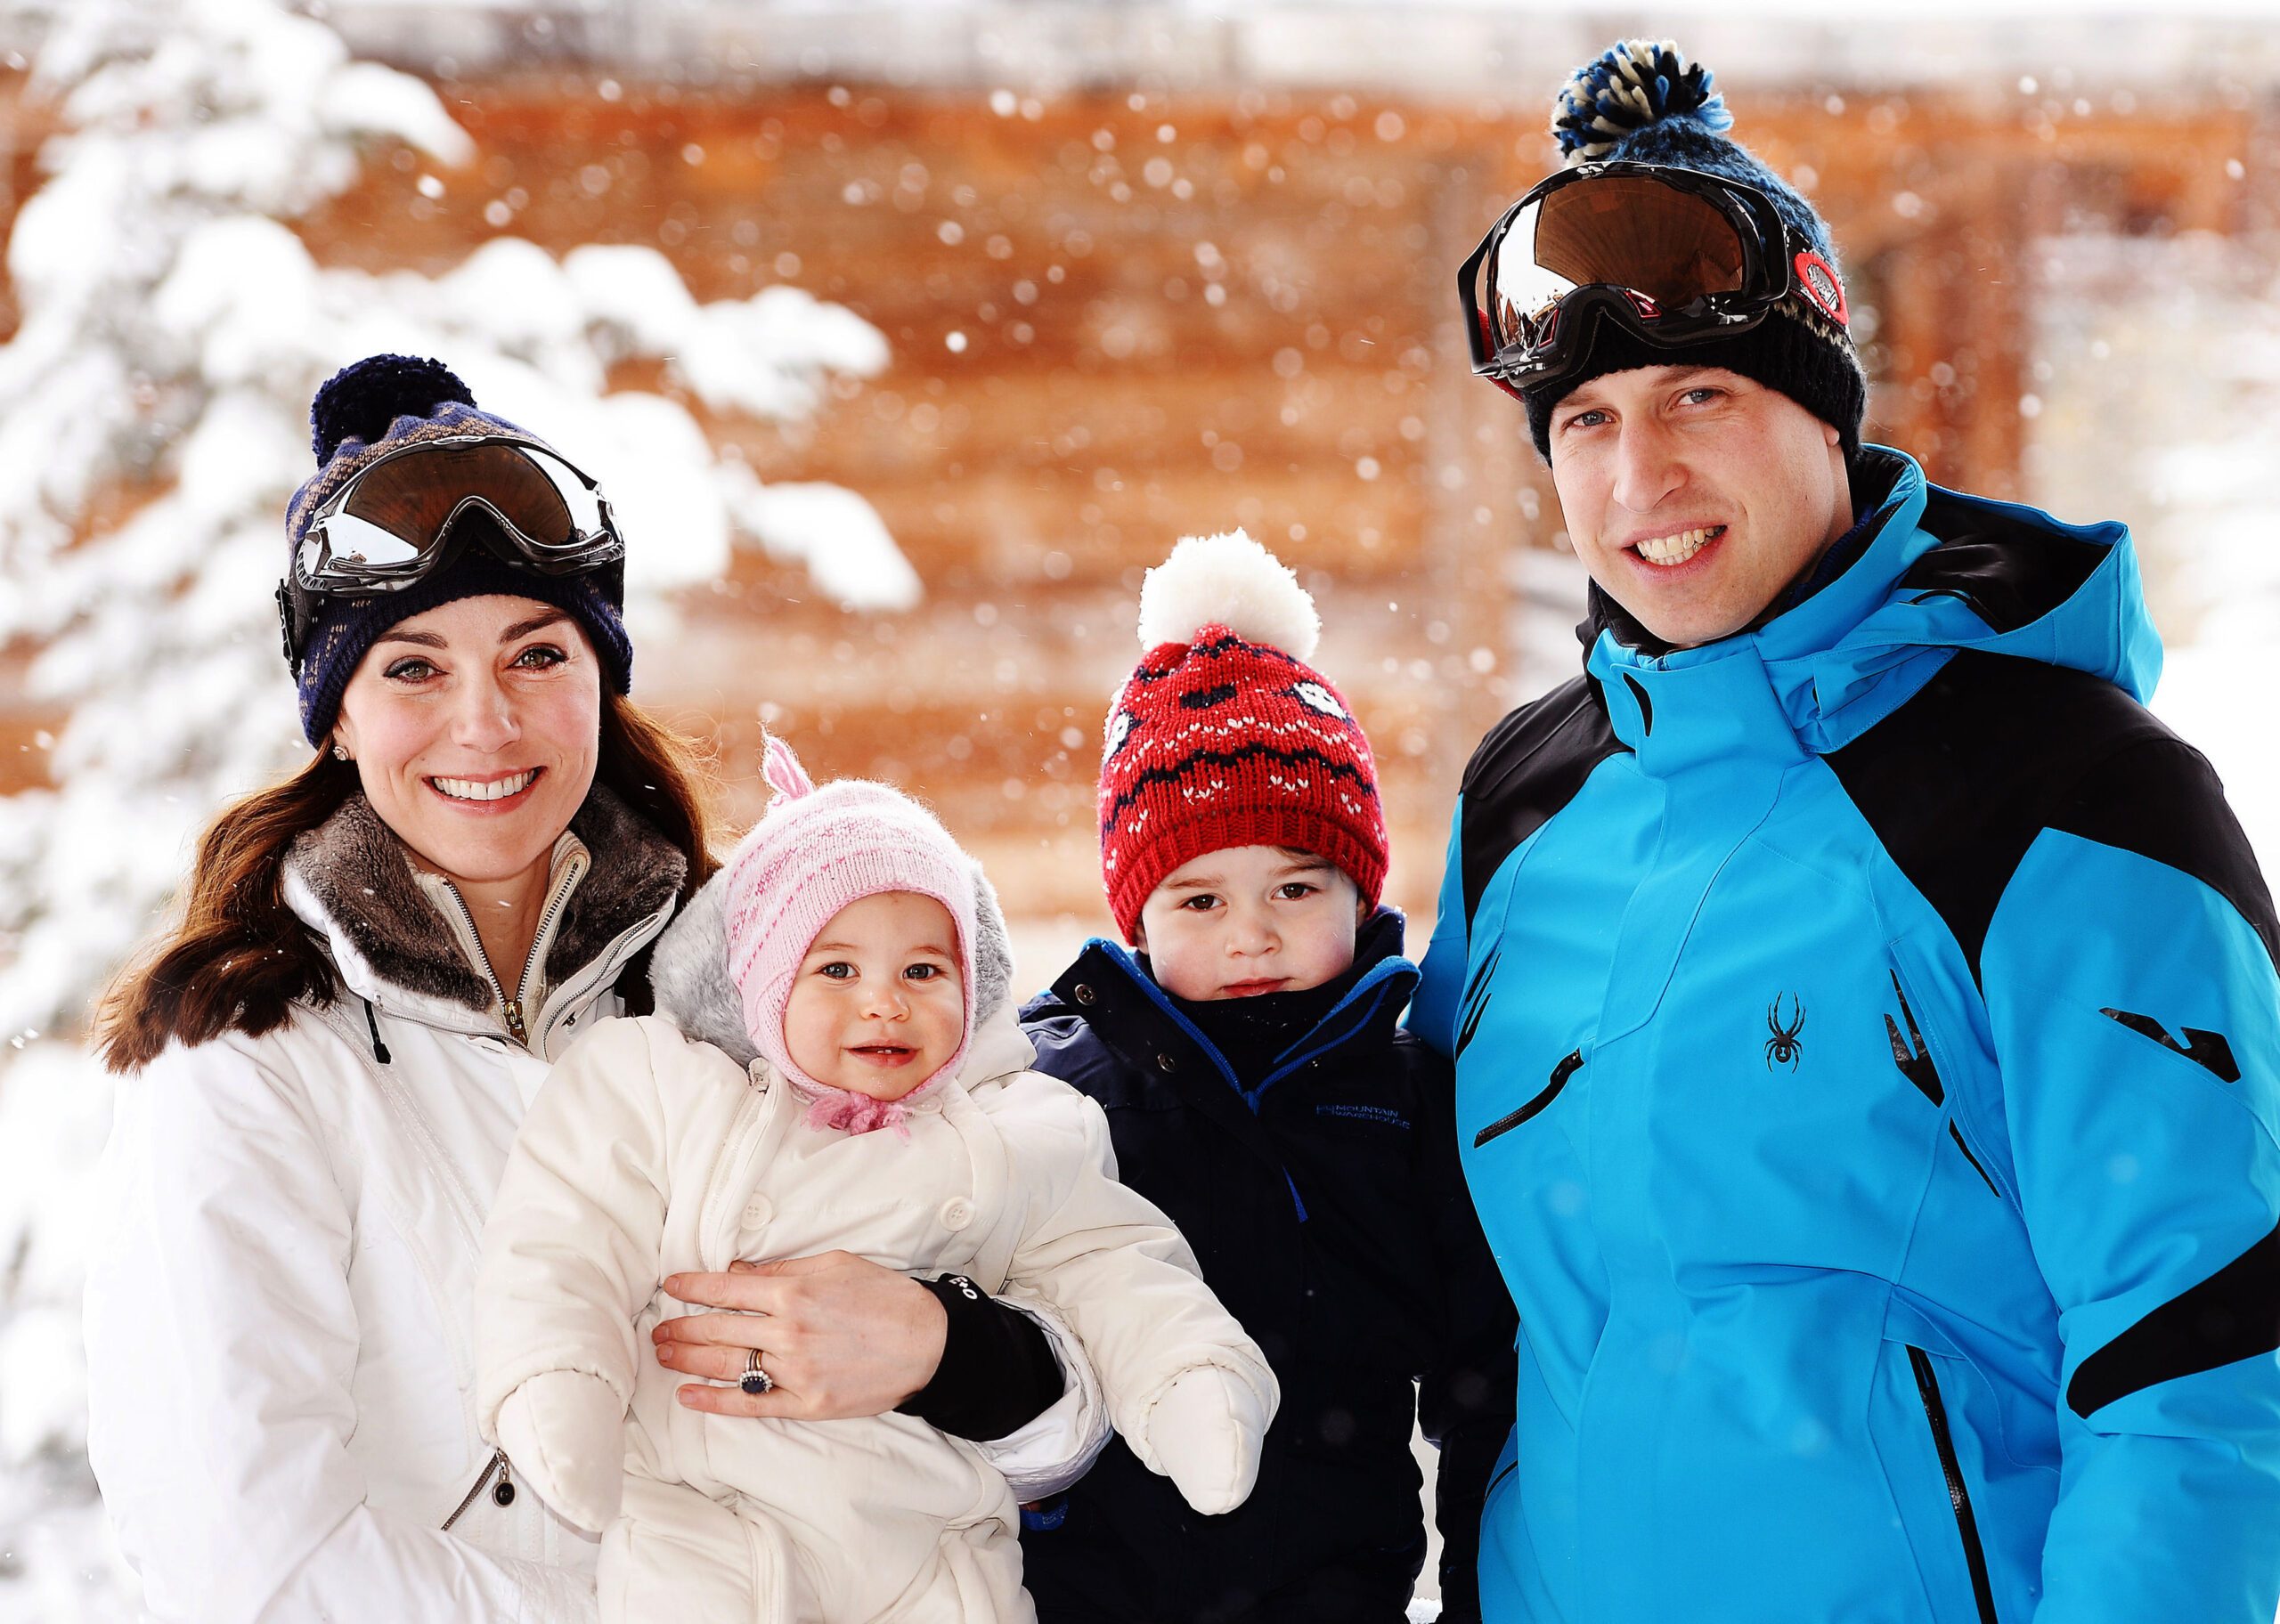 IN PHOTOS: Prince William and Kate Middleton take kids on ski holiday